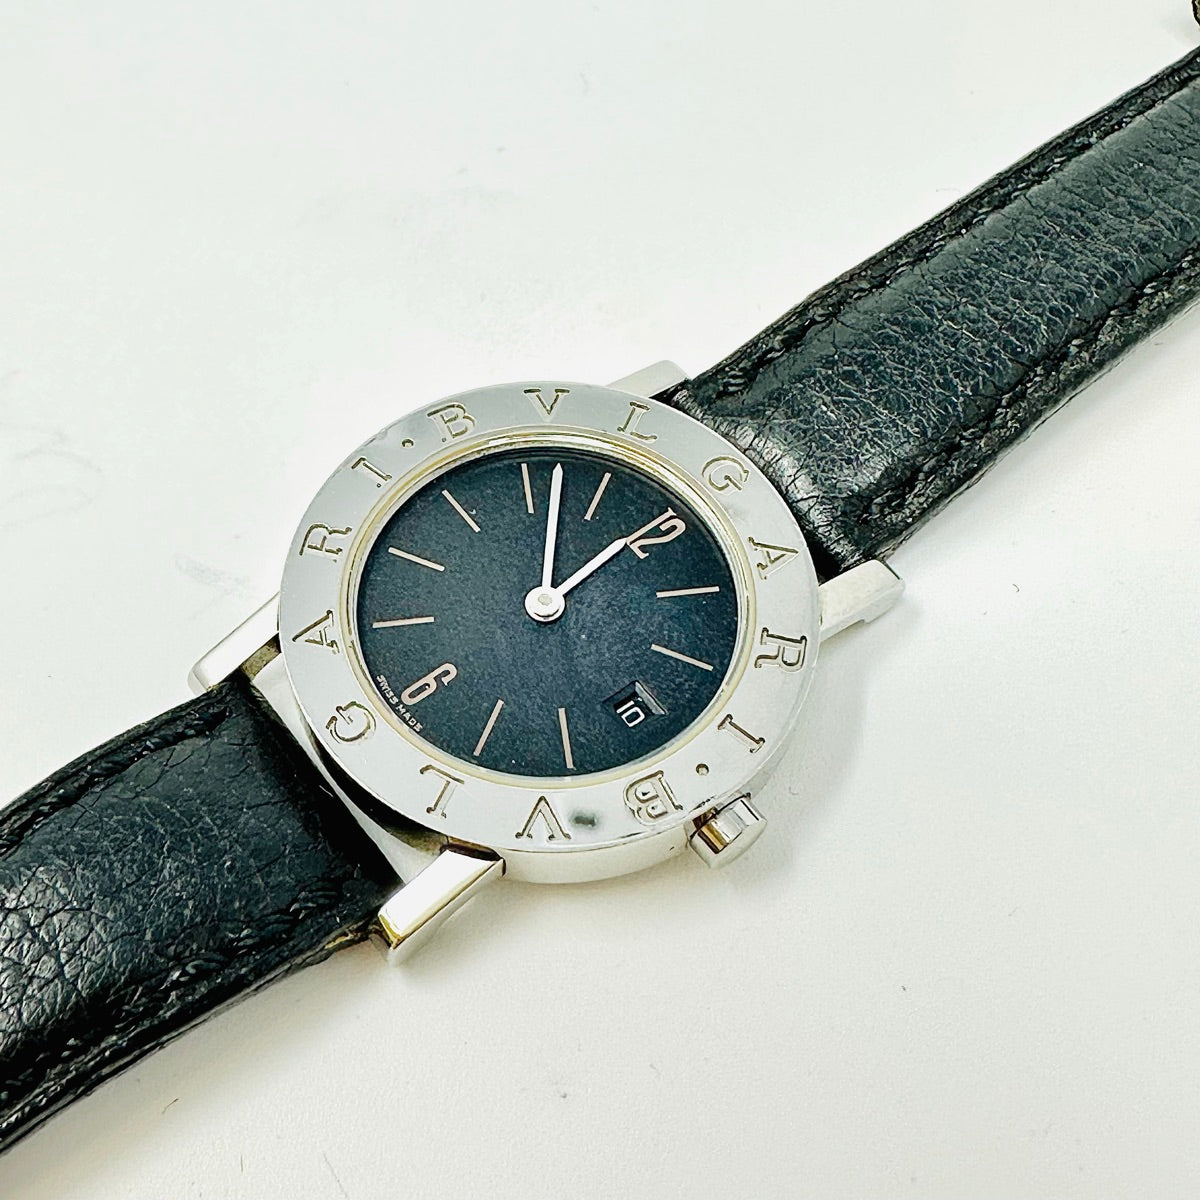 Bulgari Watch with Black Leather Strap